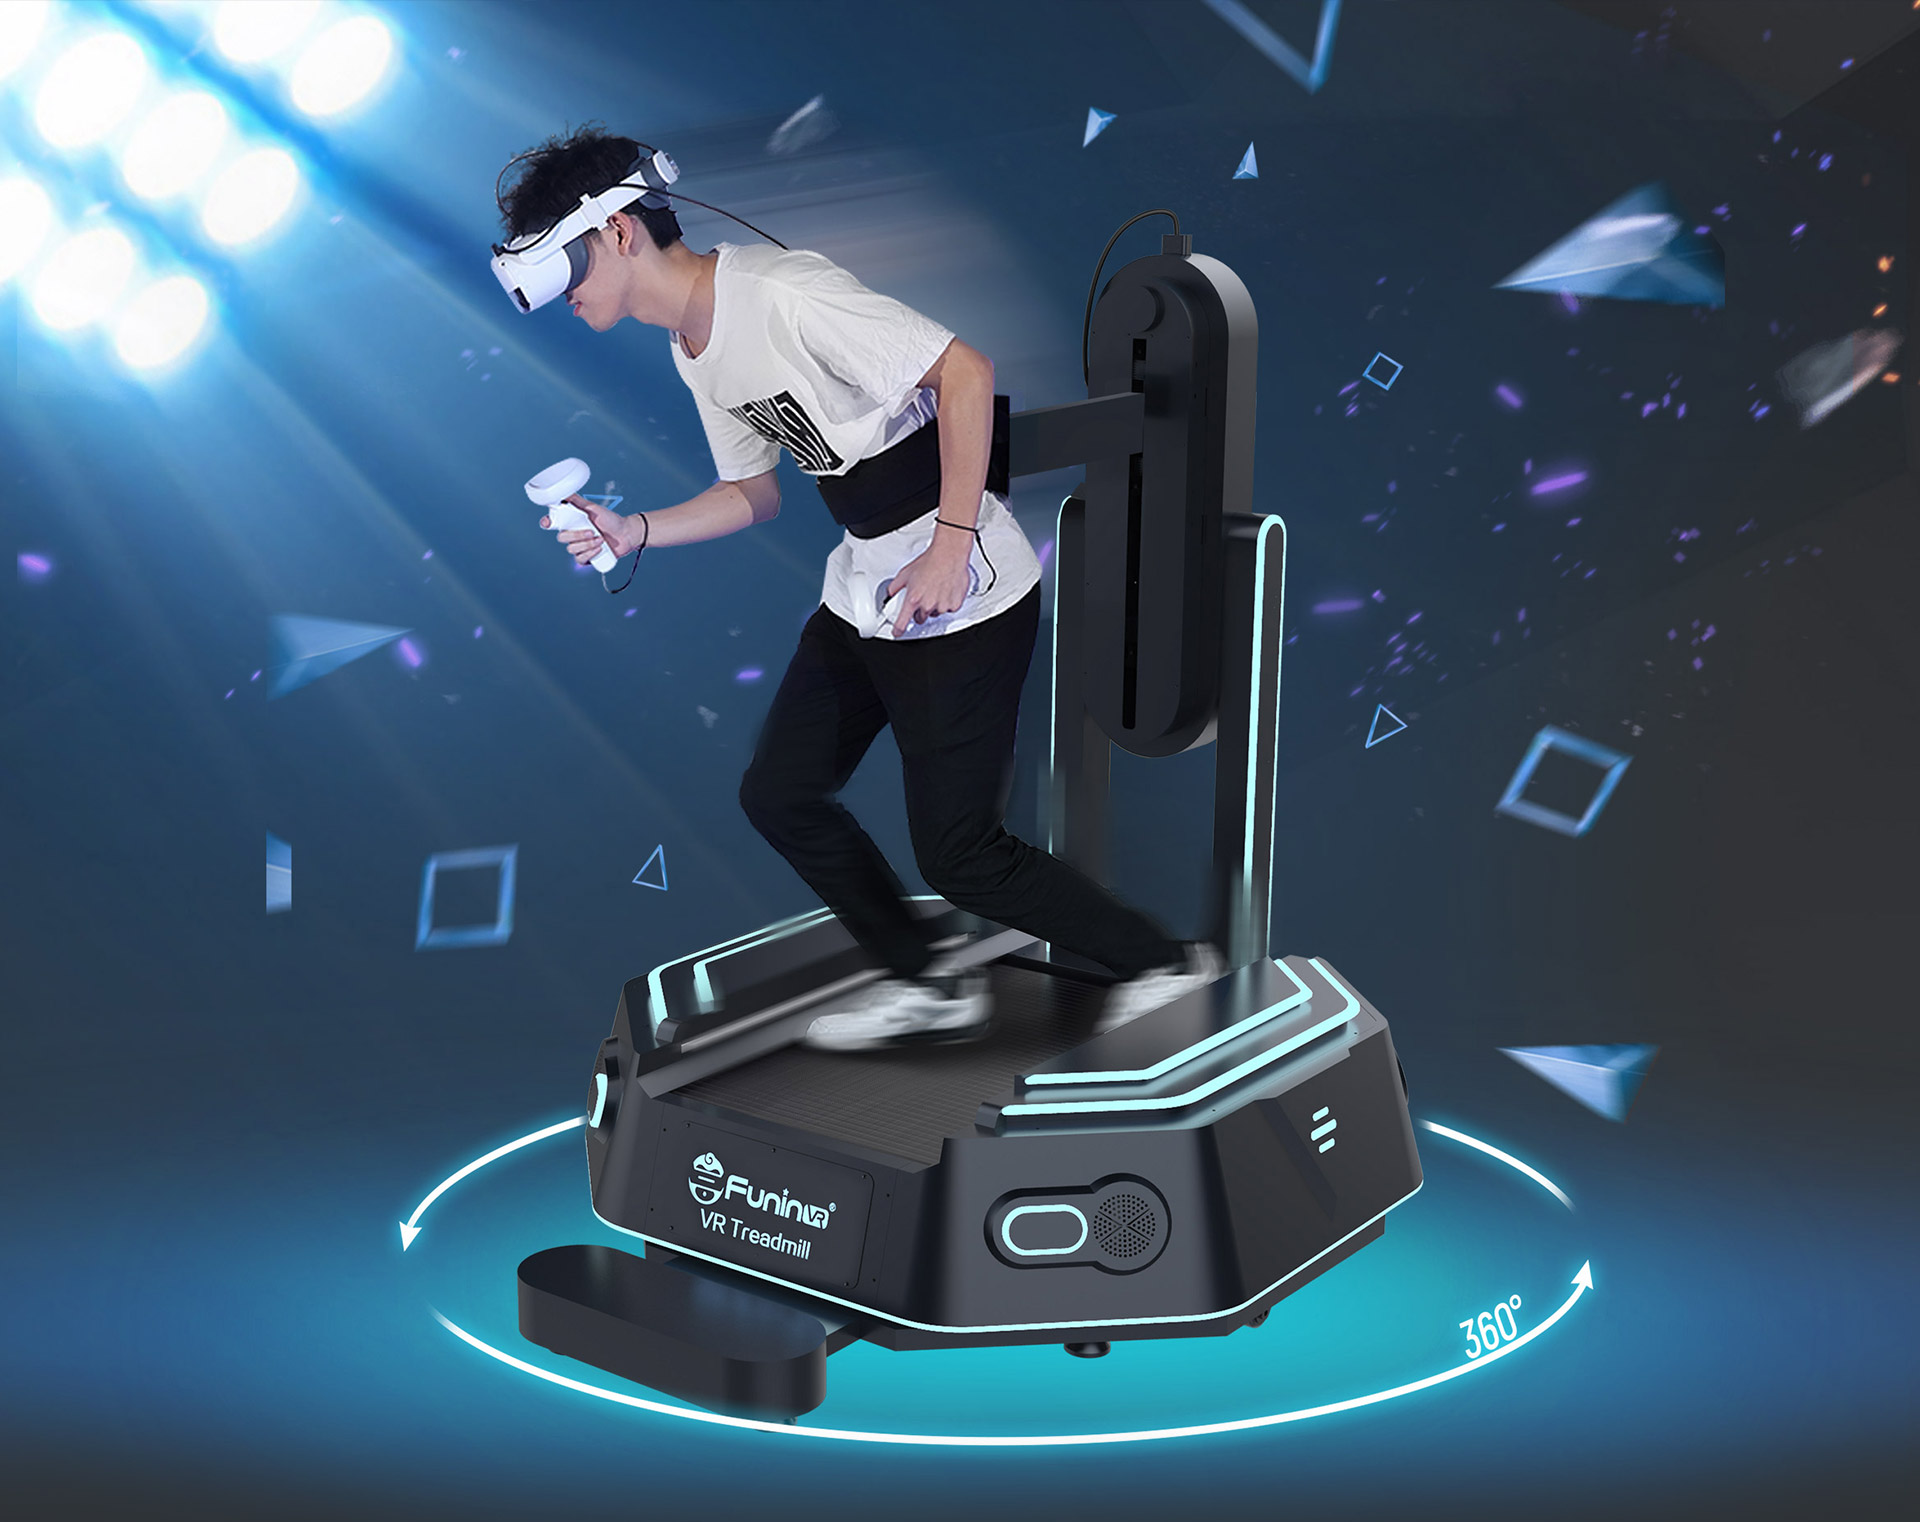 jury Modtager pedicab VR Treadmill Game Machine